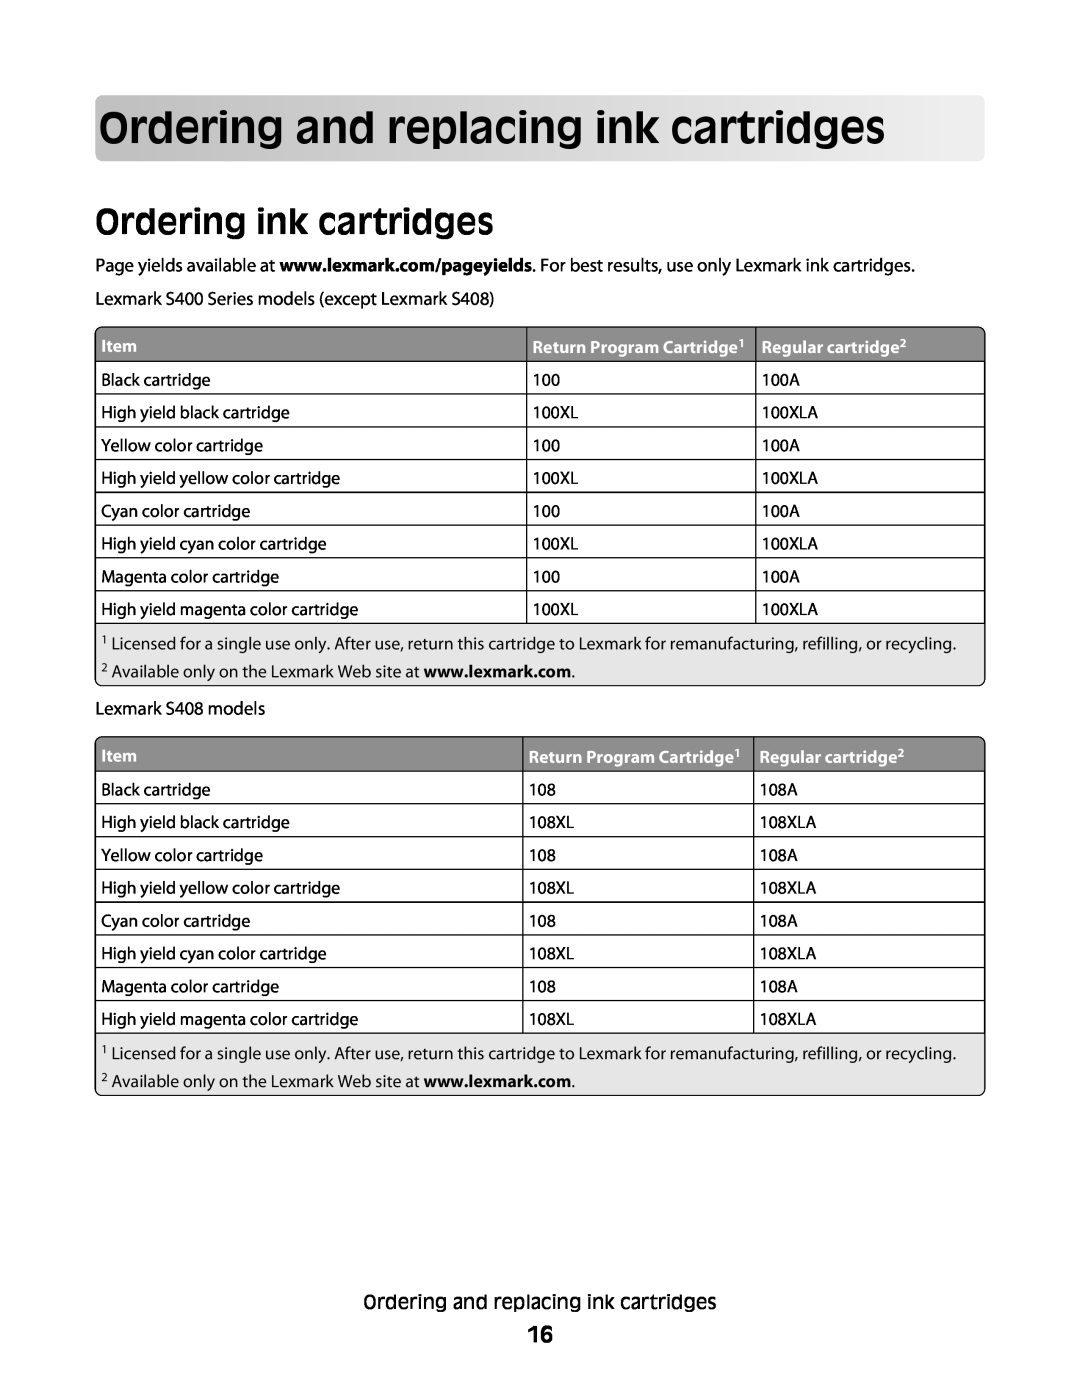 Lexmark S400 Orderingandreplacingink cartridges, Ordering ink cartridges, Return Program Cartridge1, Regular cartridge2 